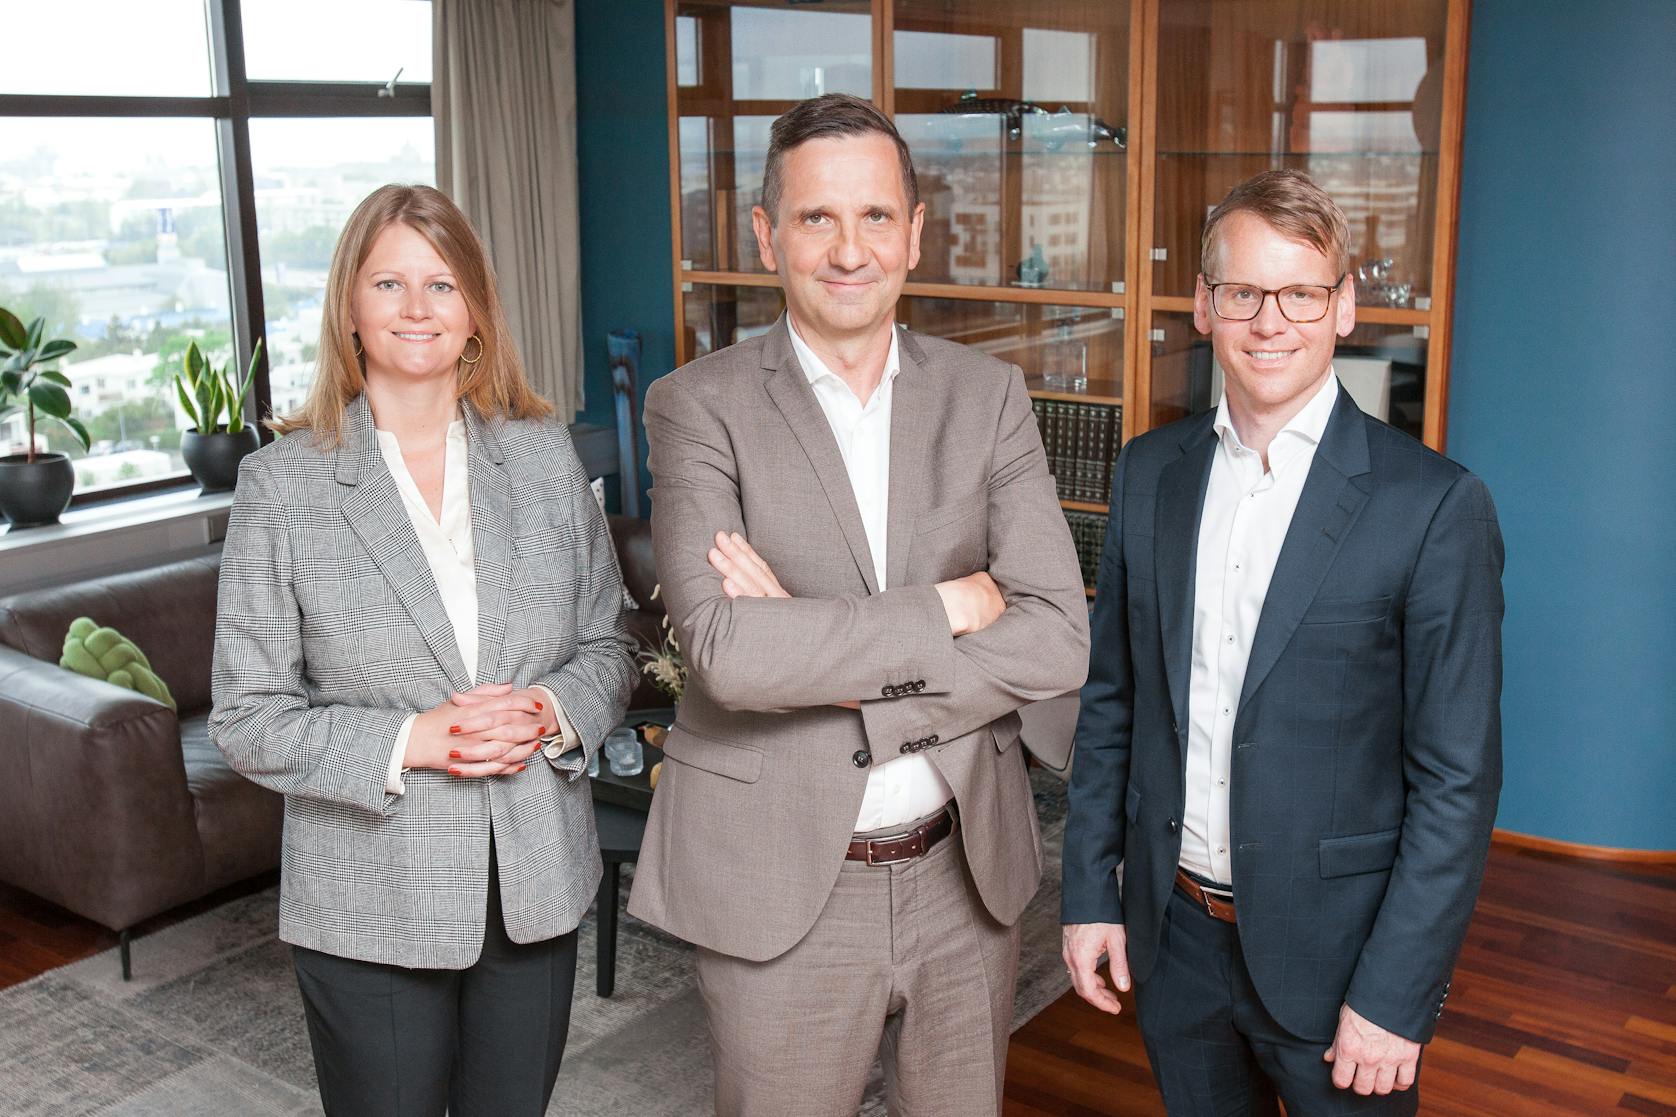 From left: Tinna Traustadóttir, Excecutive VP of Sales and Services, Landsvirkjun, Hörður Arnarson, CEO of Landsvirkjun and Eyjólfur Magnús Kristinsson, CEO of atNorth.